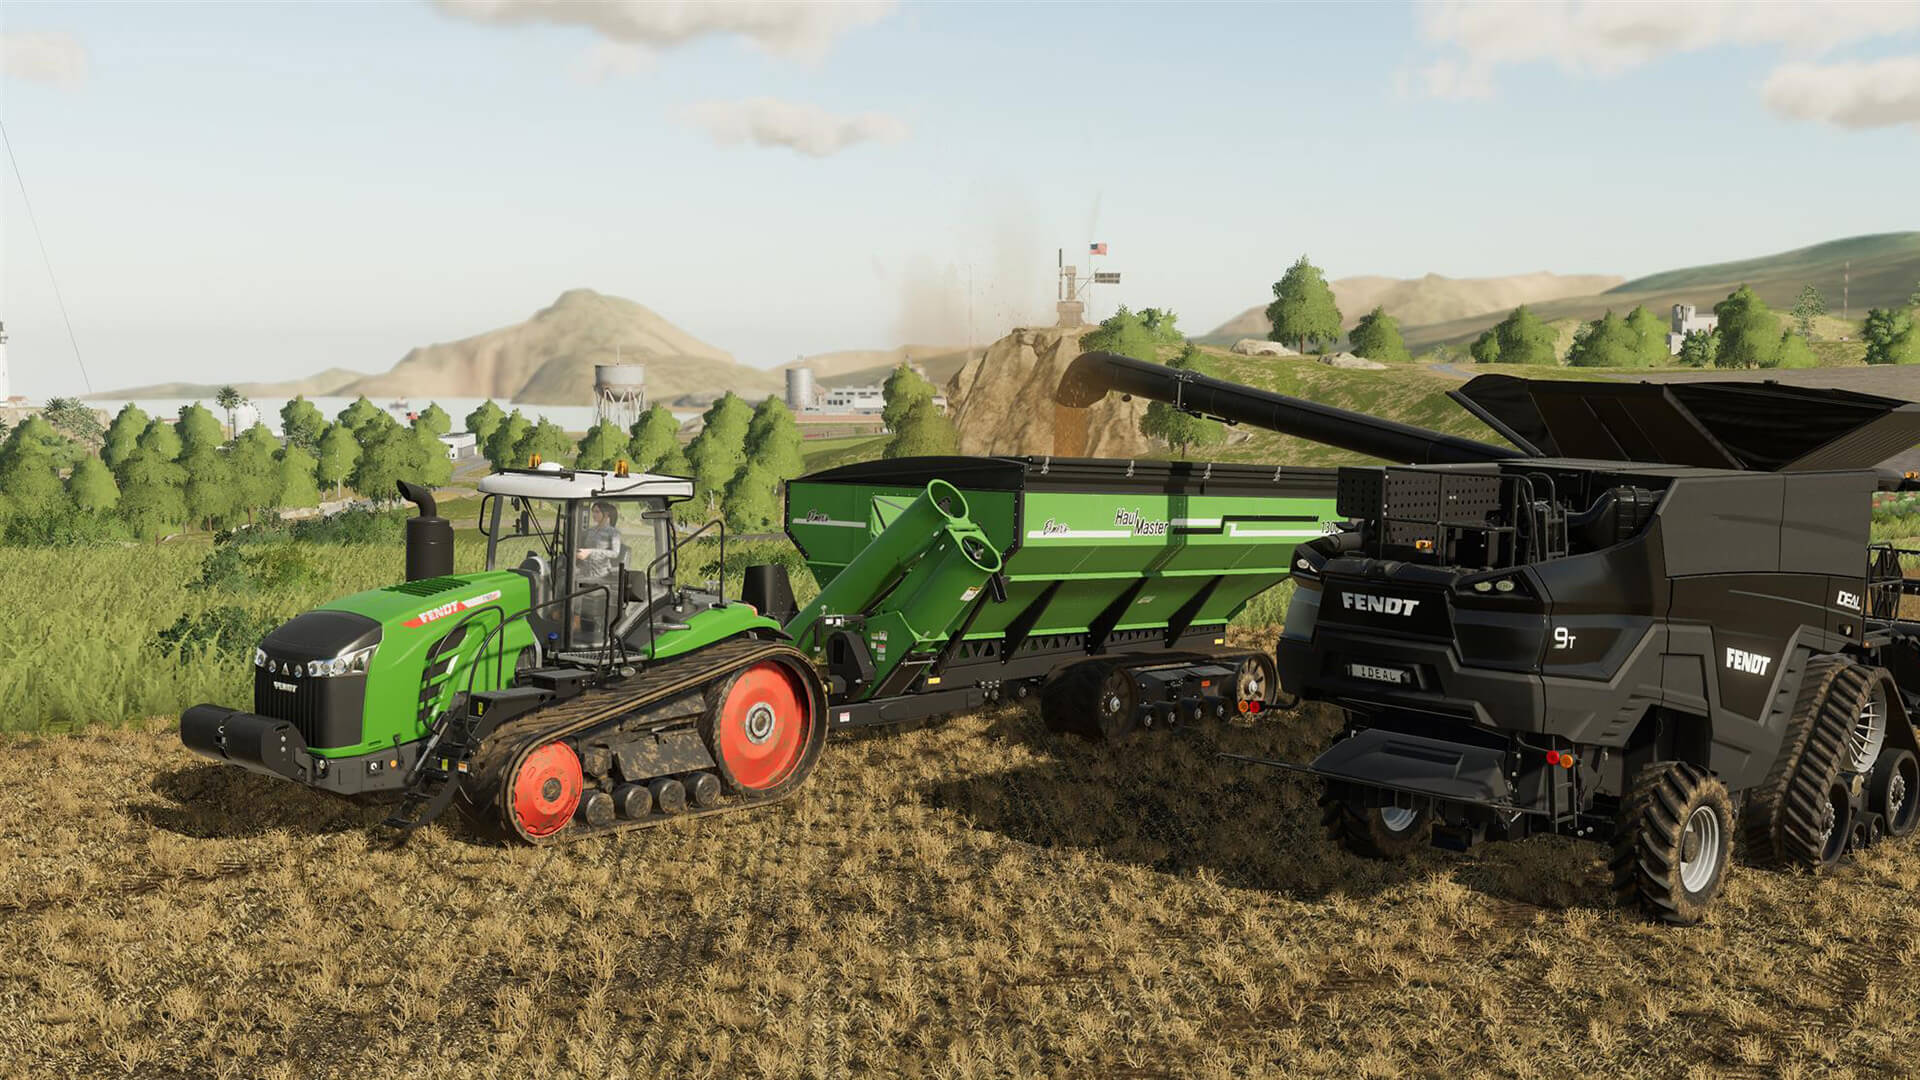 Farming simulator oyun inceleme